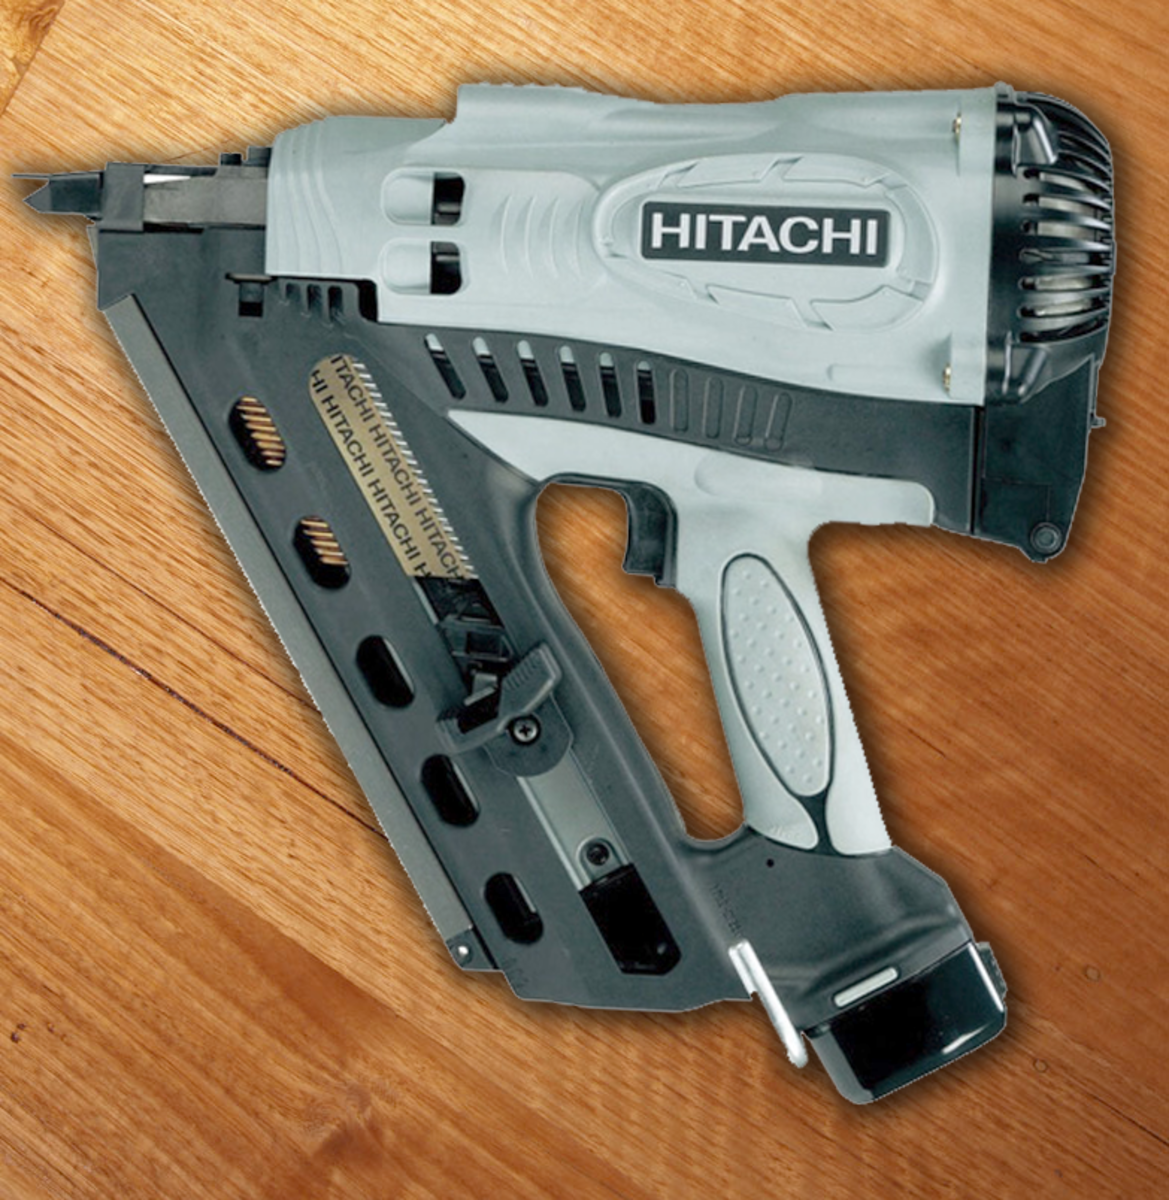 Hitachi gas-powered framing nailer.